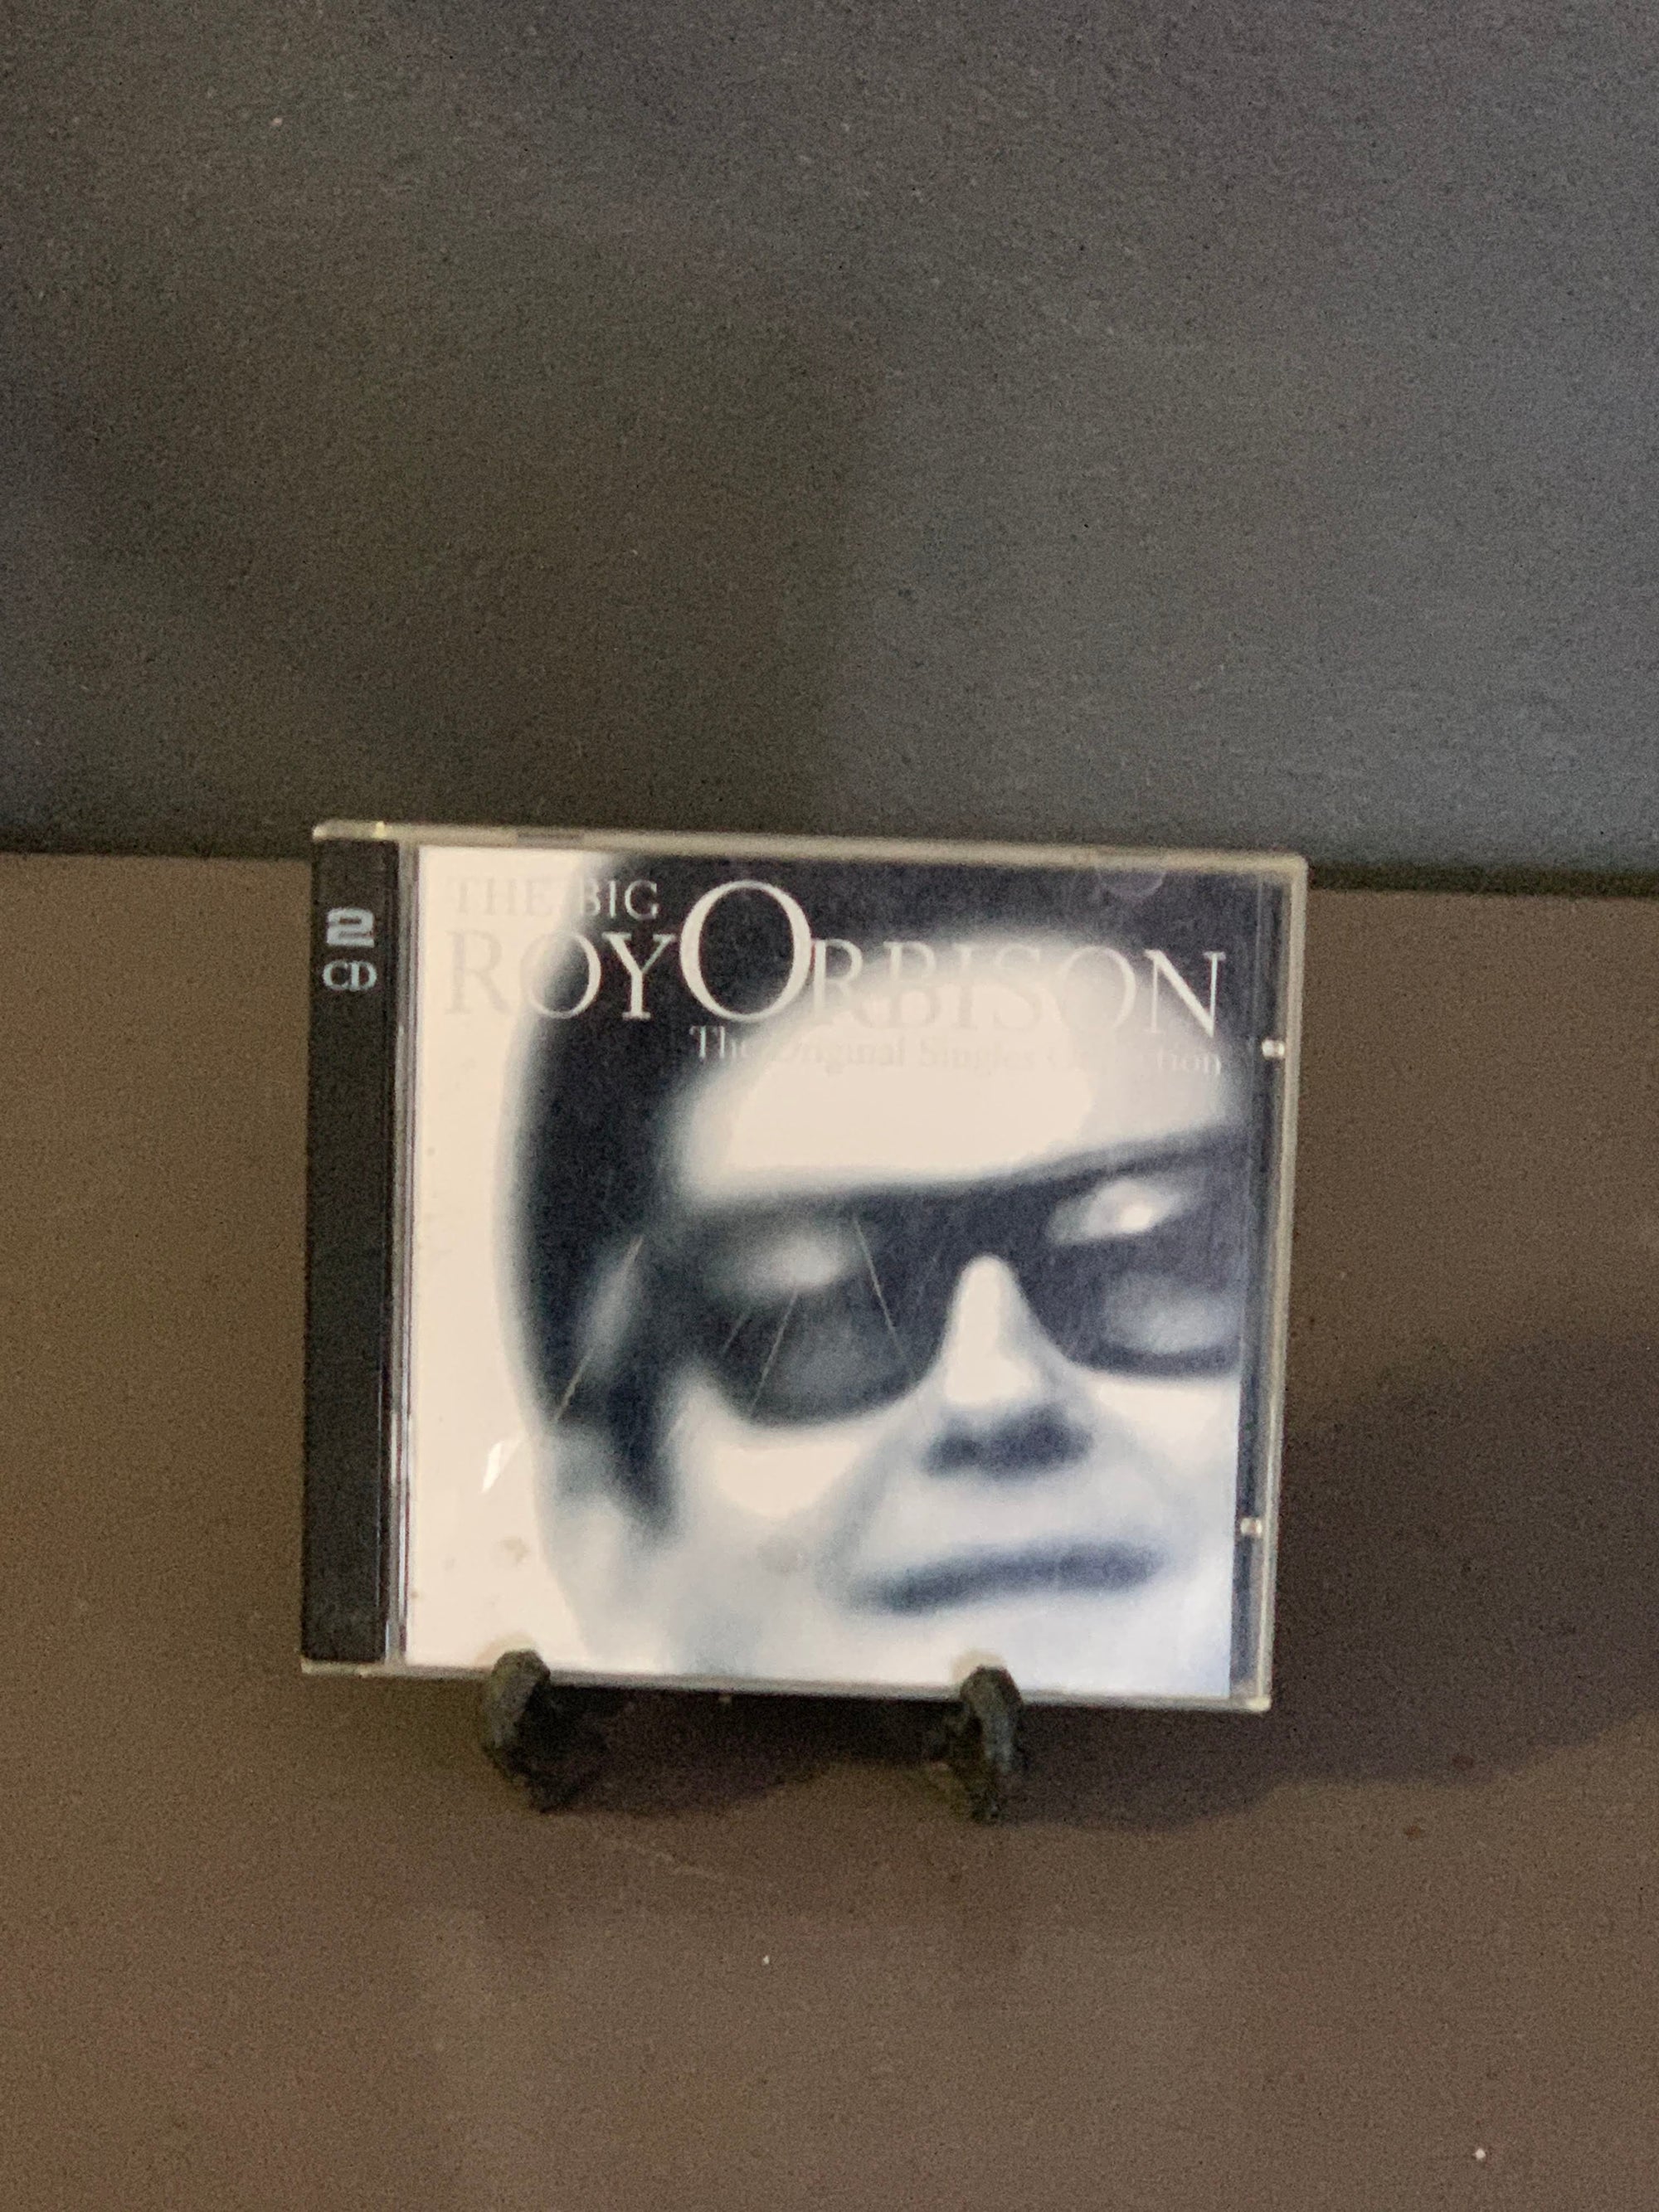 Roy Orbison - 2ndhandwarehouse.com